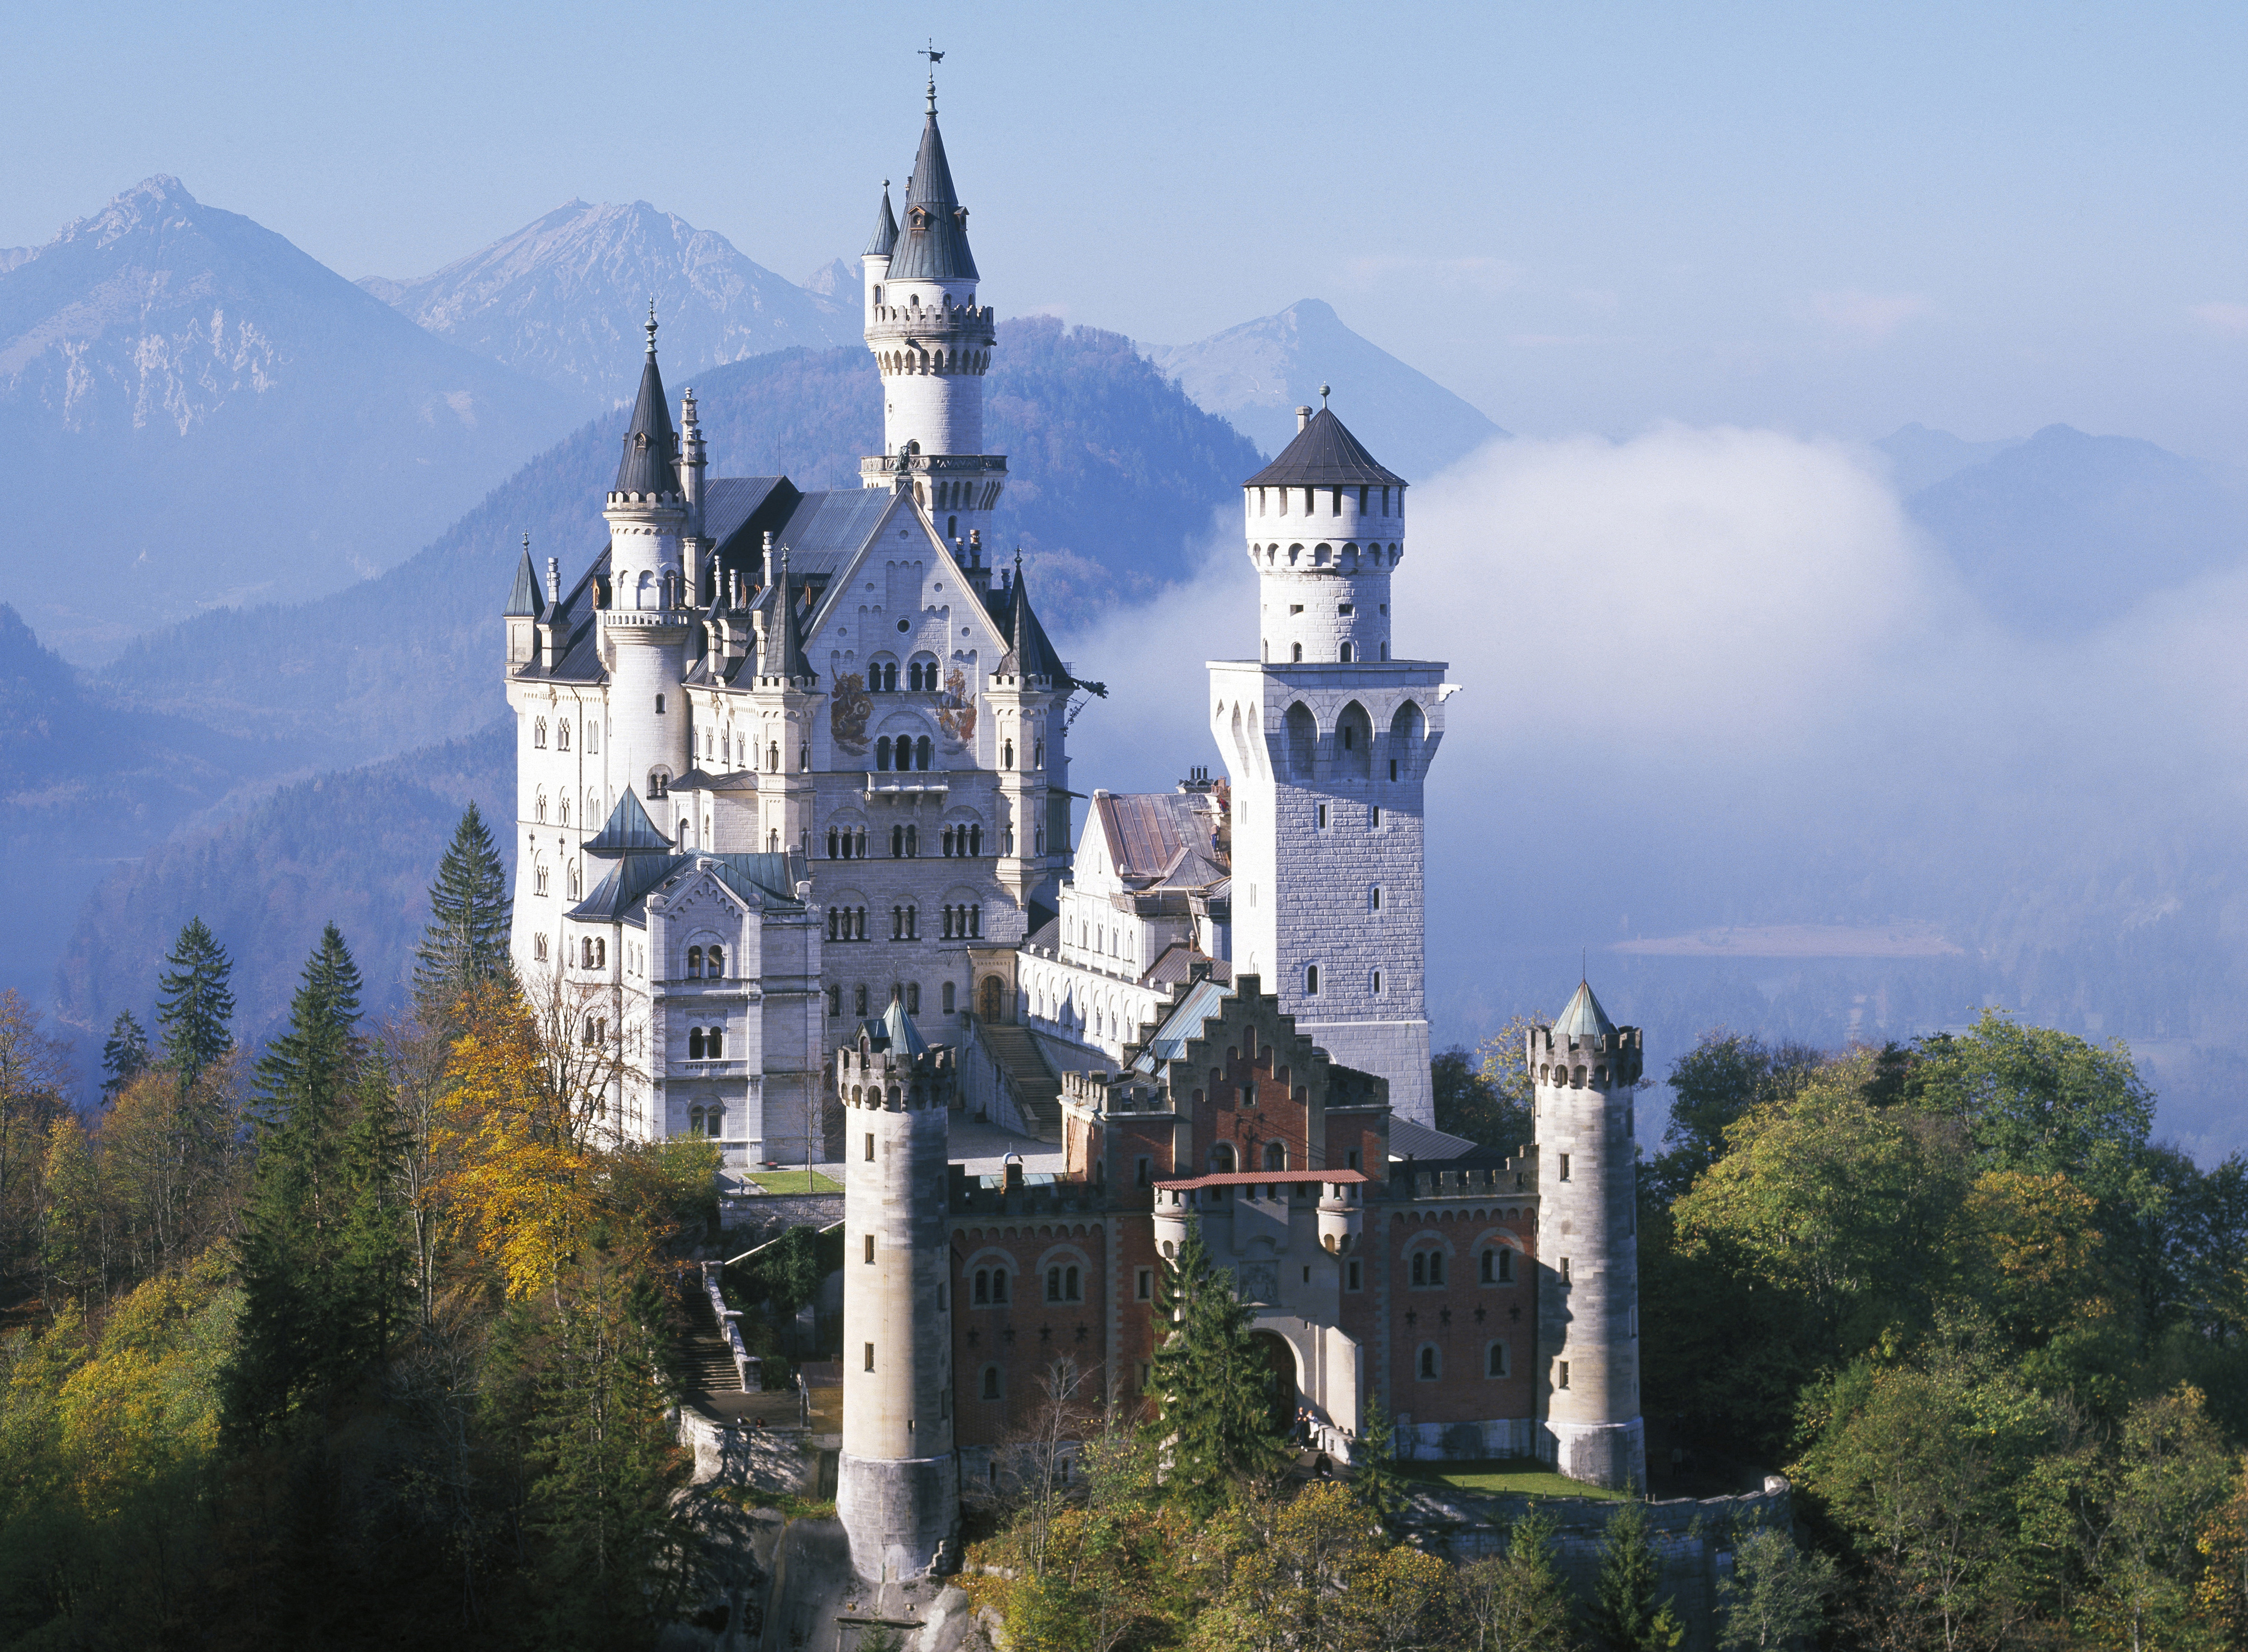 Bavarias Neuschwanstein Castle Is A Fairy Tale Dream Come True Huffpost